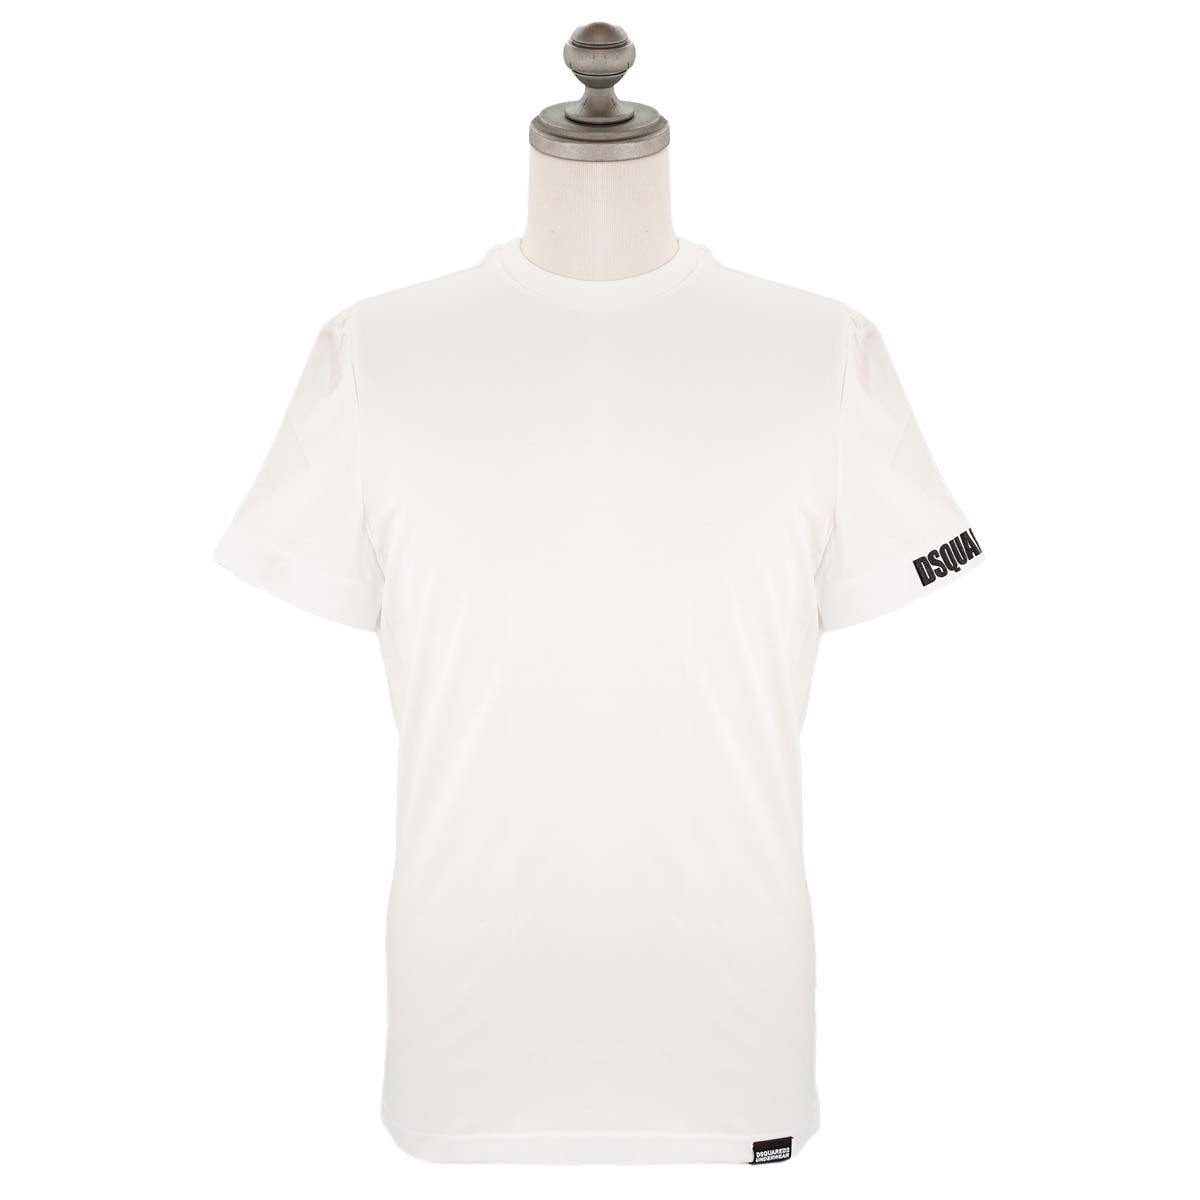 DSQUARED2 ディースクエアード 半袖Tシャツ D9M3S4530 UNDEREWAR T-SHIRT メンズ 男性 アンダーウェア 100  WHITE ホワイト ジェガール メルカリ